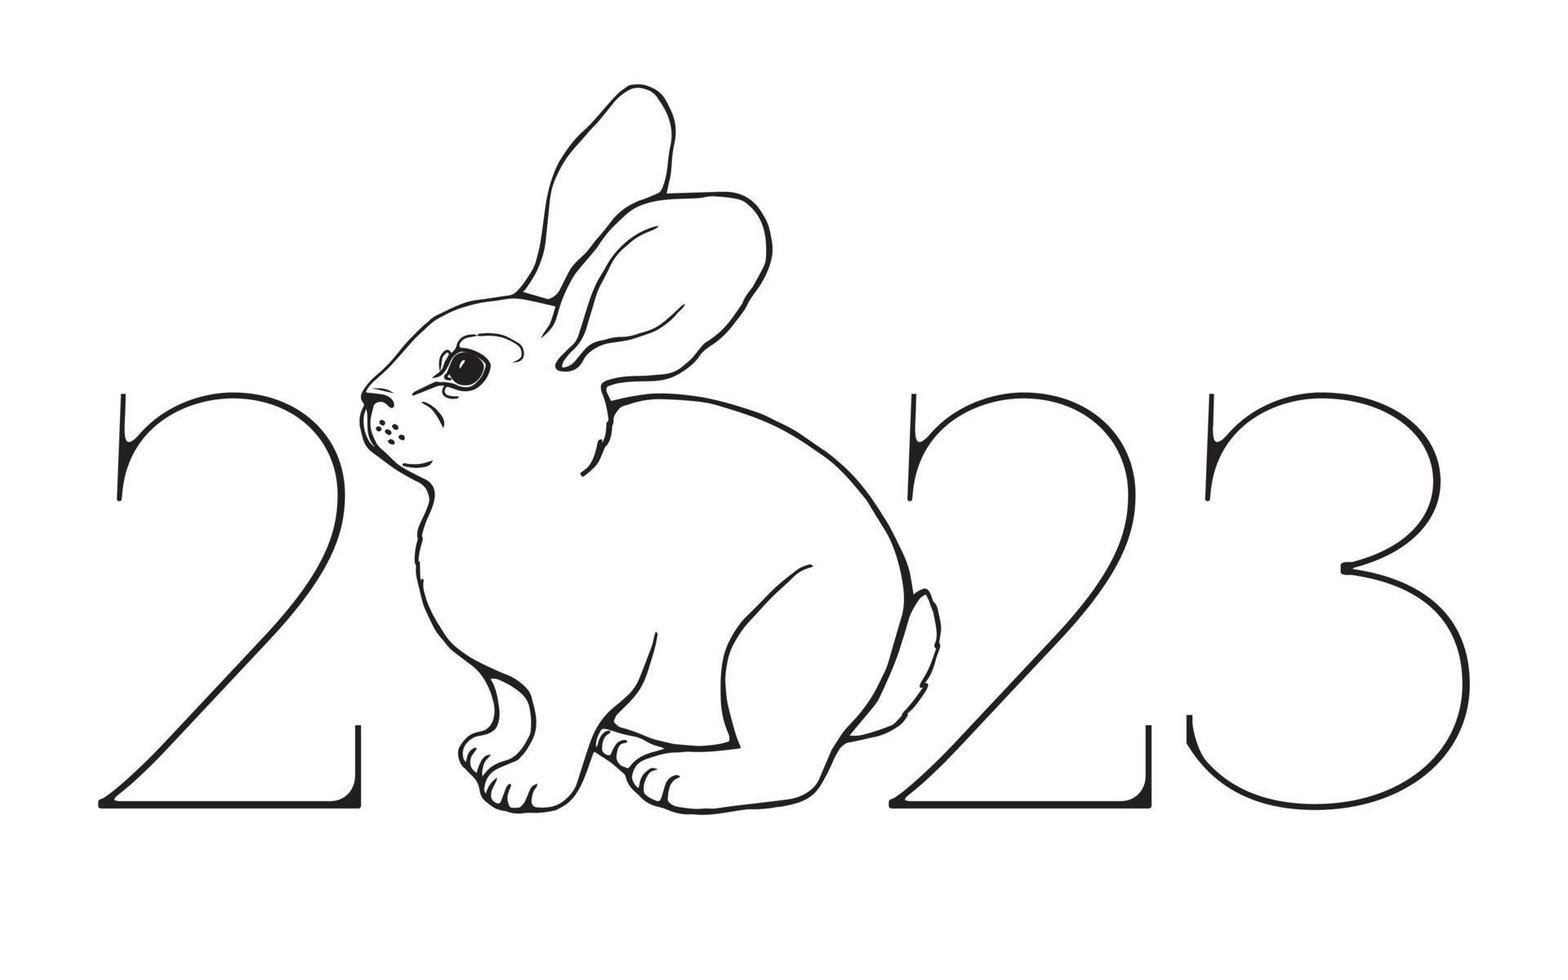 2023-Logo mit Häschen. Vektor-Illustration. vektor